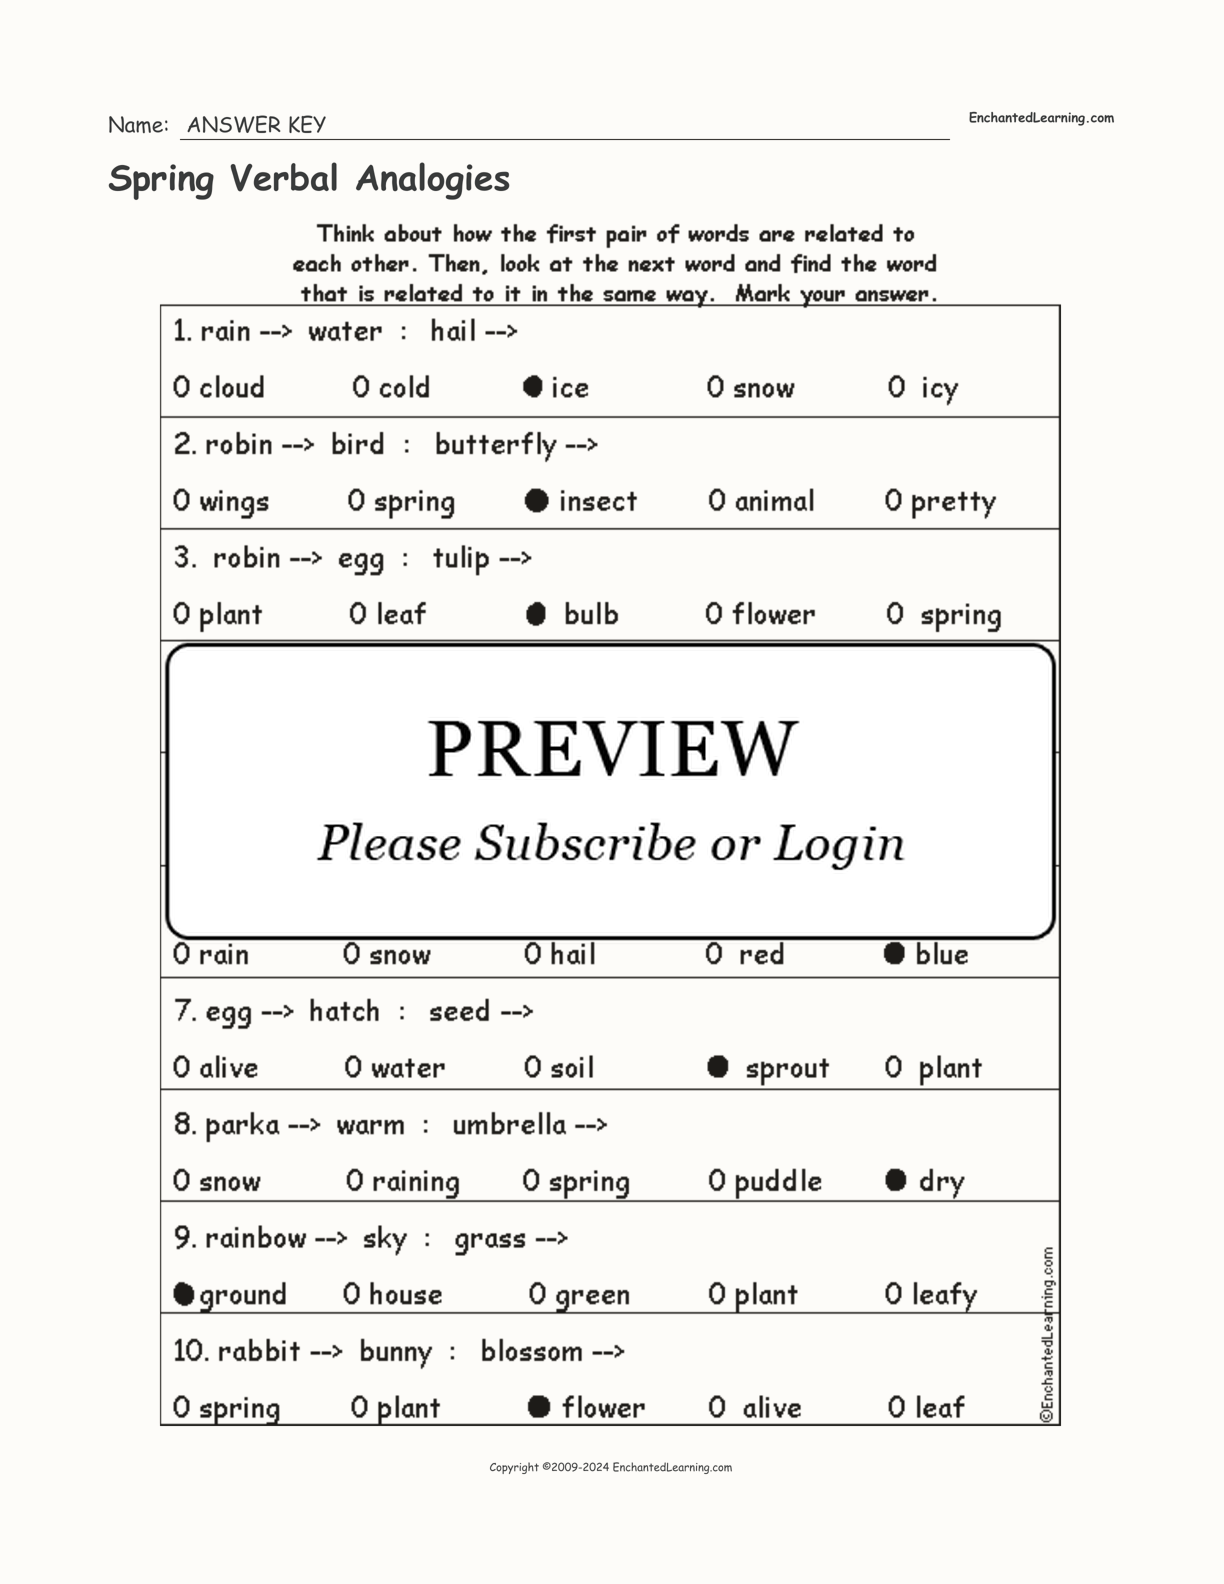 Spring Verbal Analogies interactive worksheet page 2